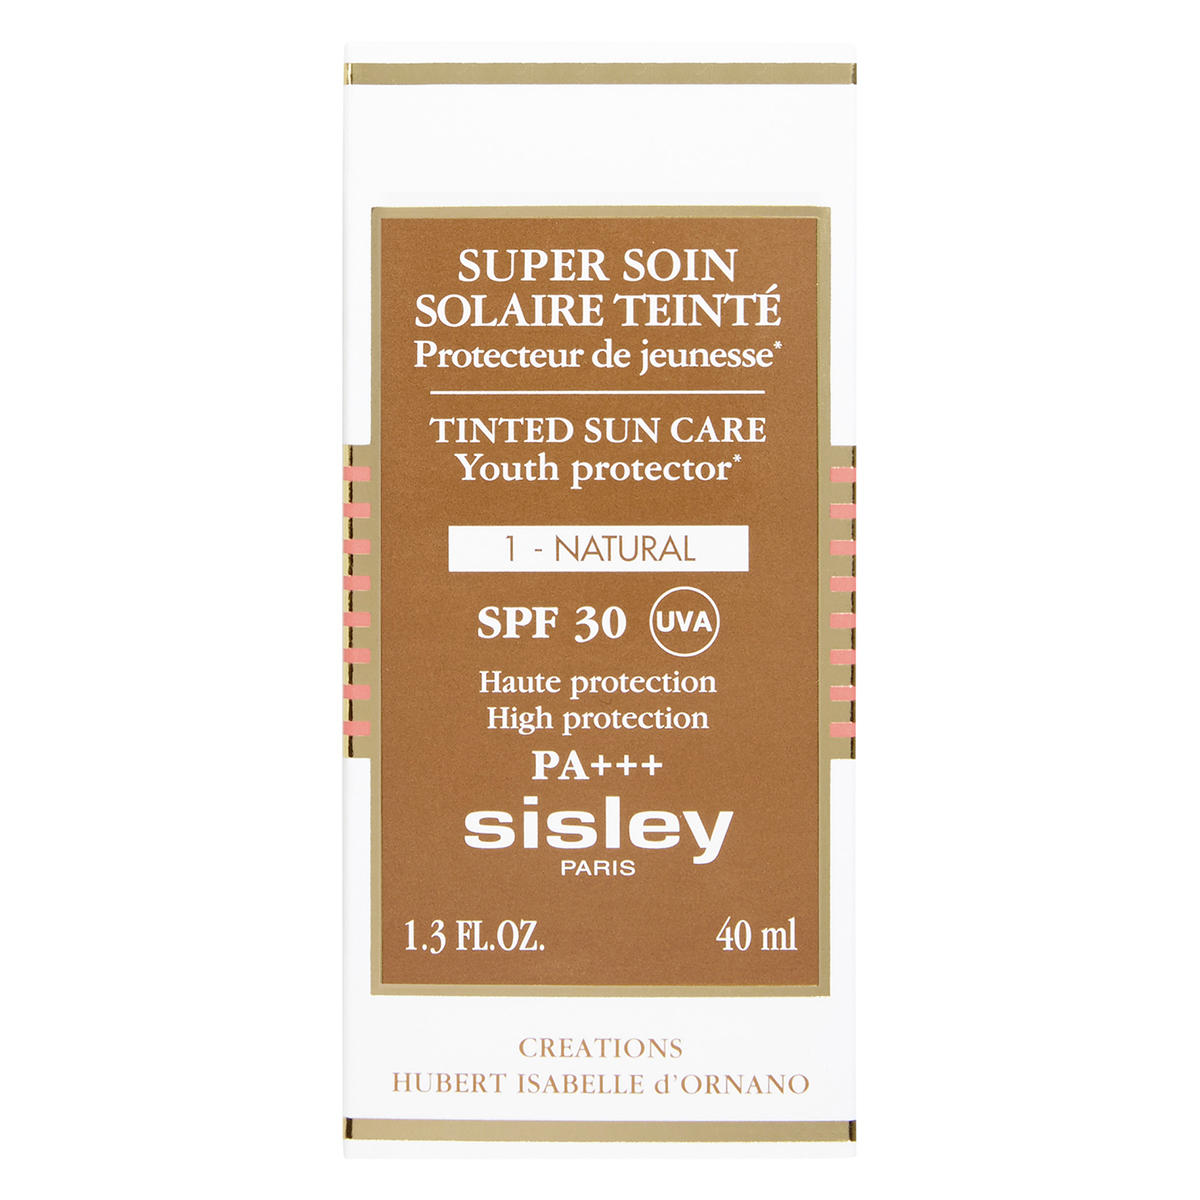 Sisley Paris Super Soin Solaire Teinté SPF 30 1 Natural, 40 ml - 3